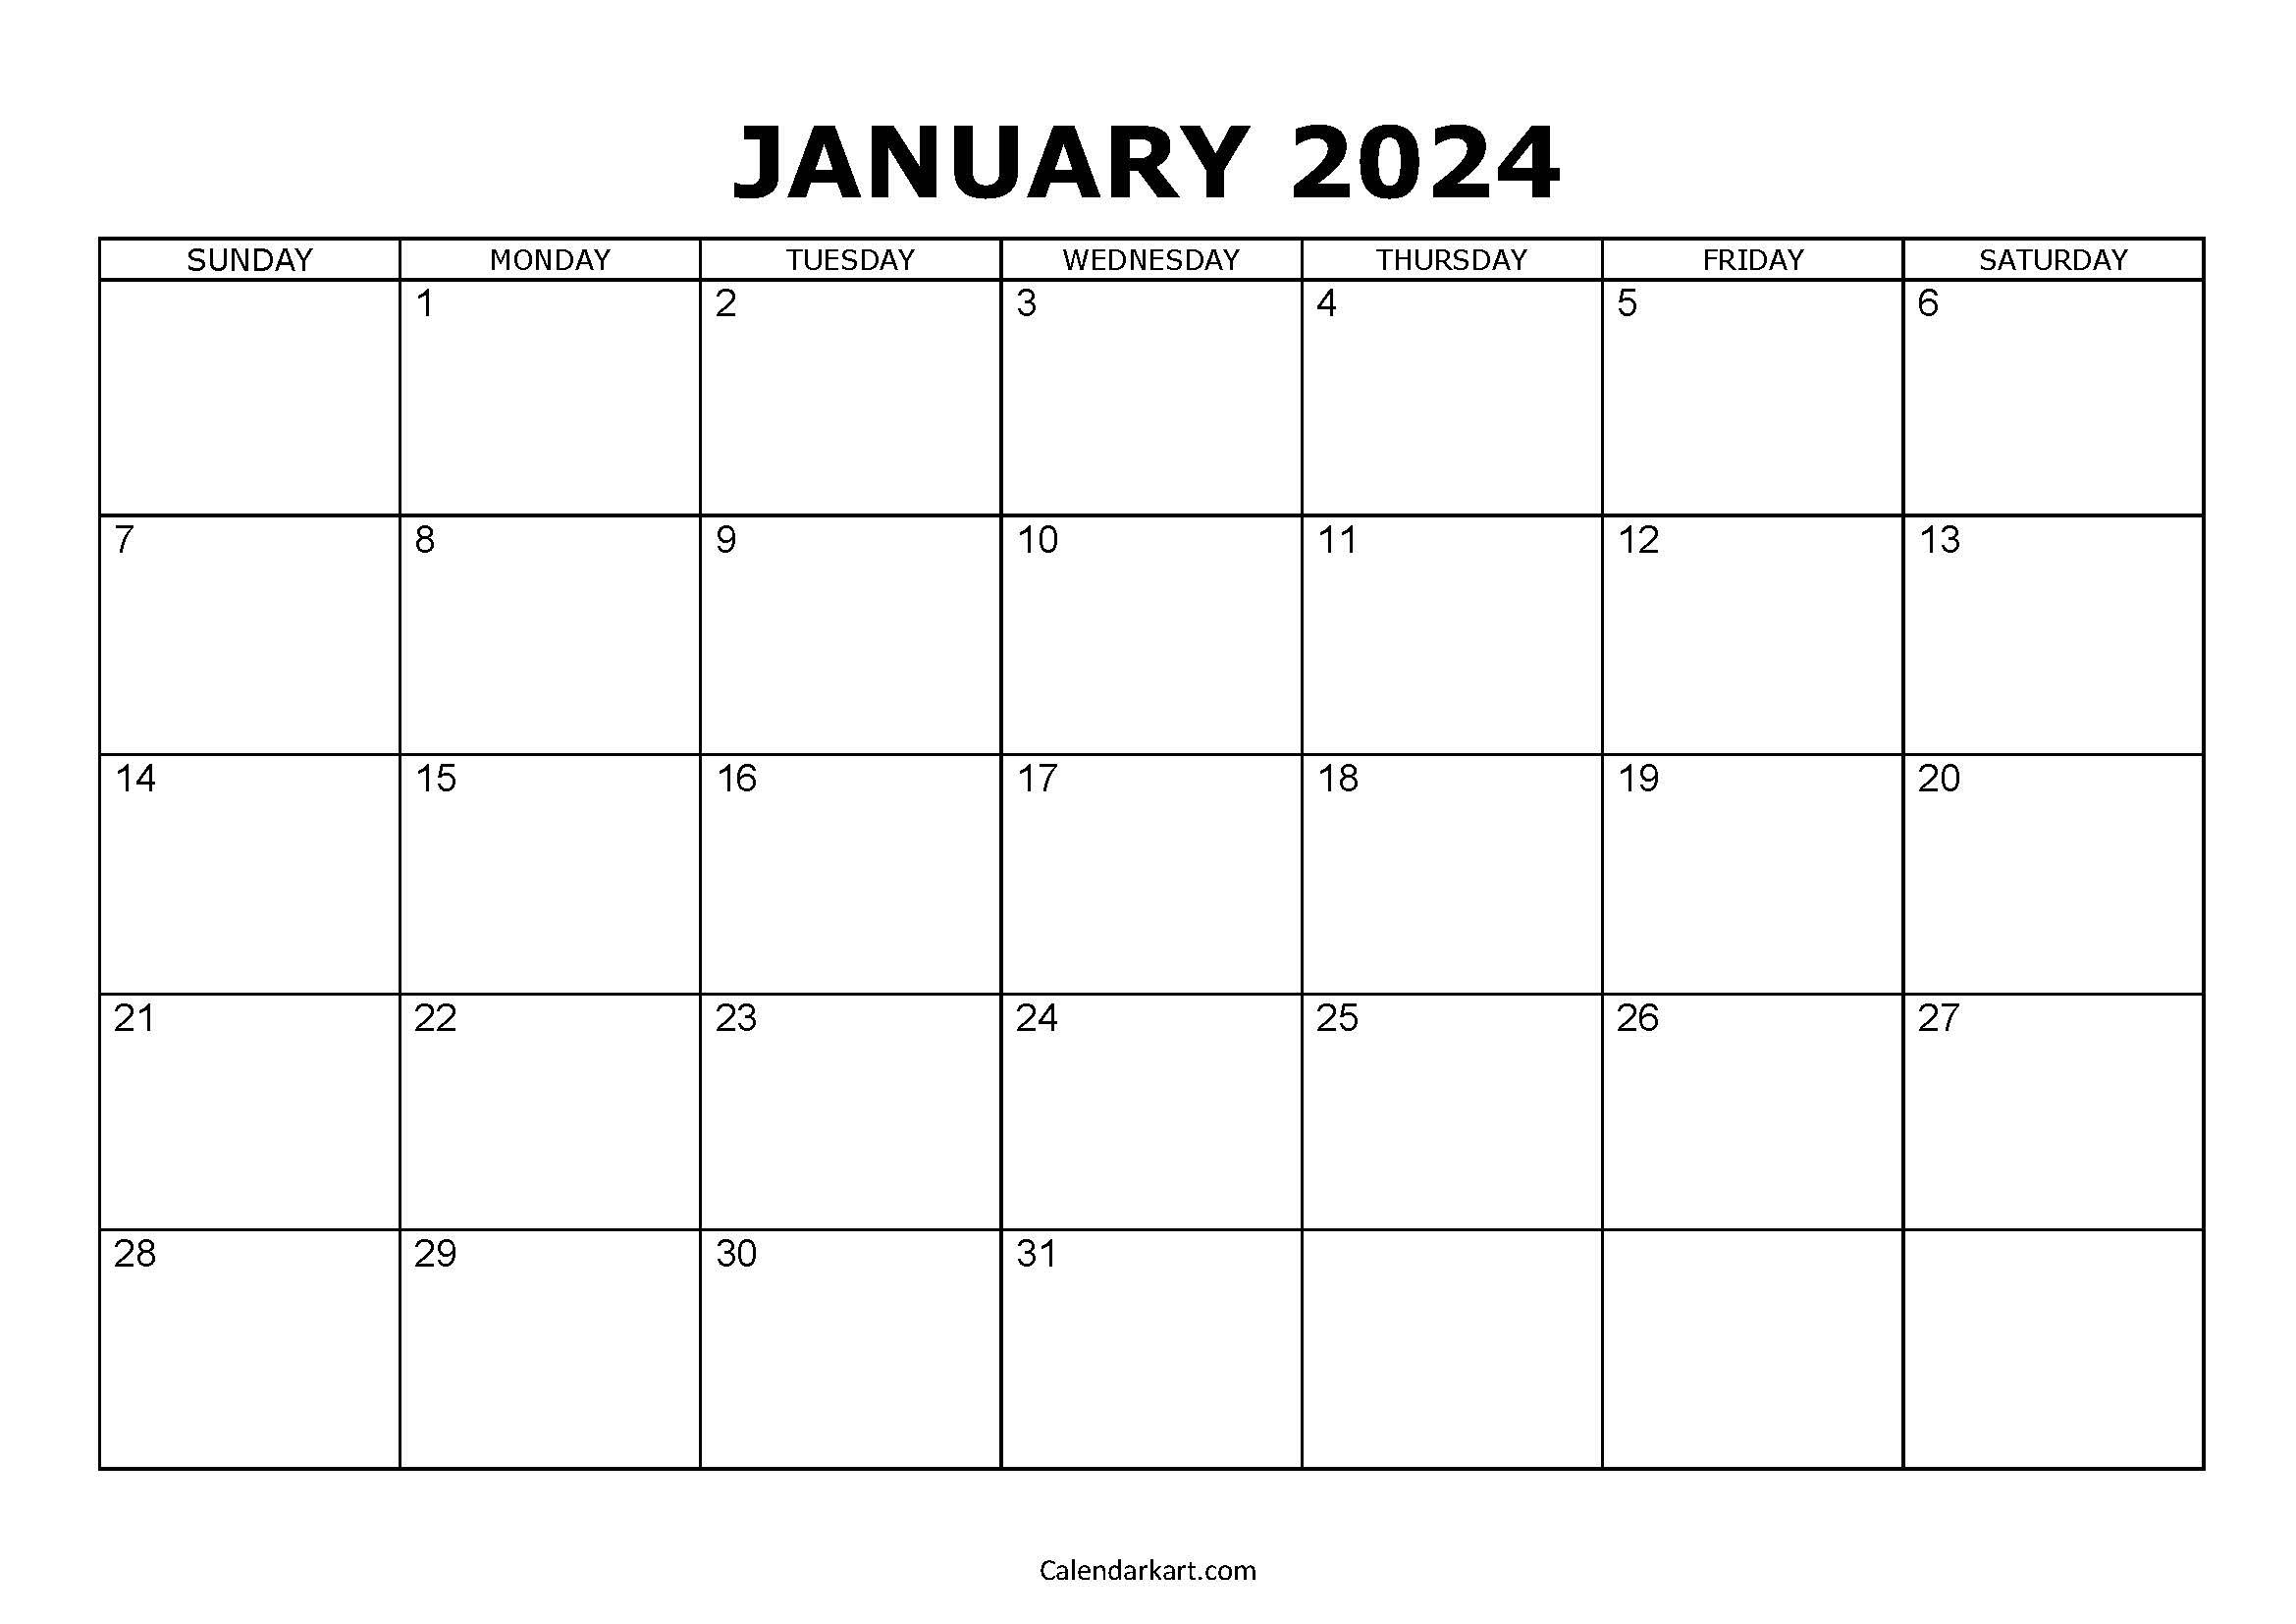 Free Printable January 2024 Calendars - Calendarkart within Free Printable Calendar 2024 That I Can Edit